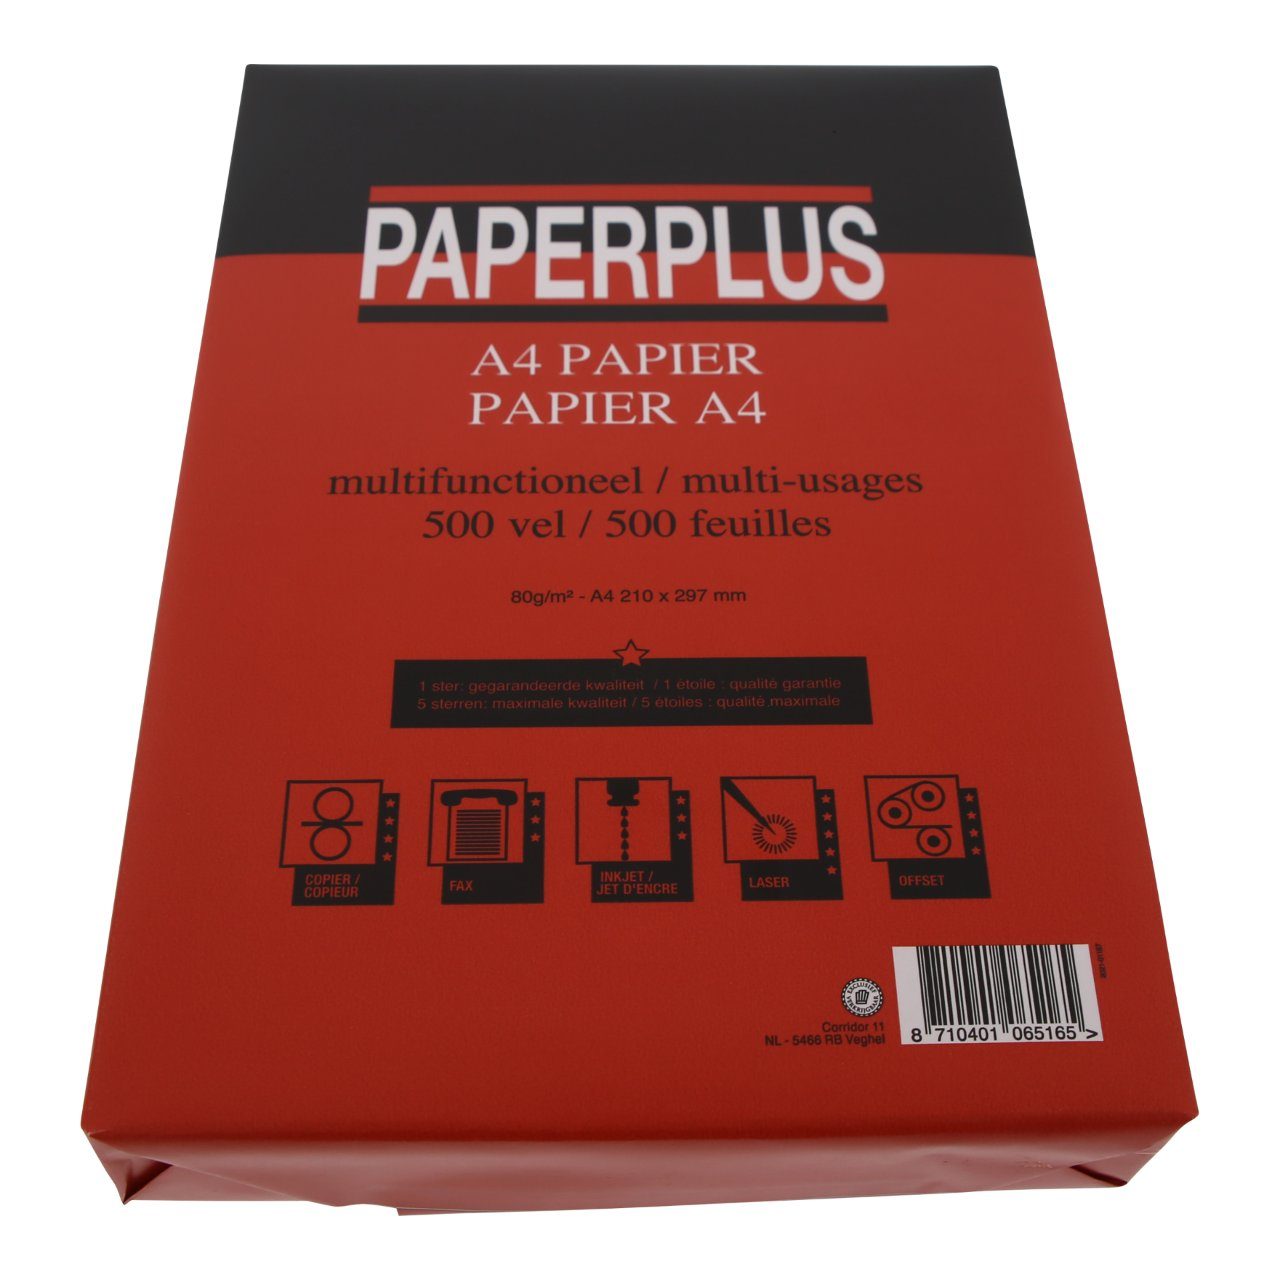 Doe herleven sla slachtoffers Paperplus Multifunctioneel papier A4 Pak 500 stuks | Sligro.nl